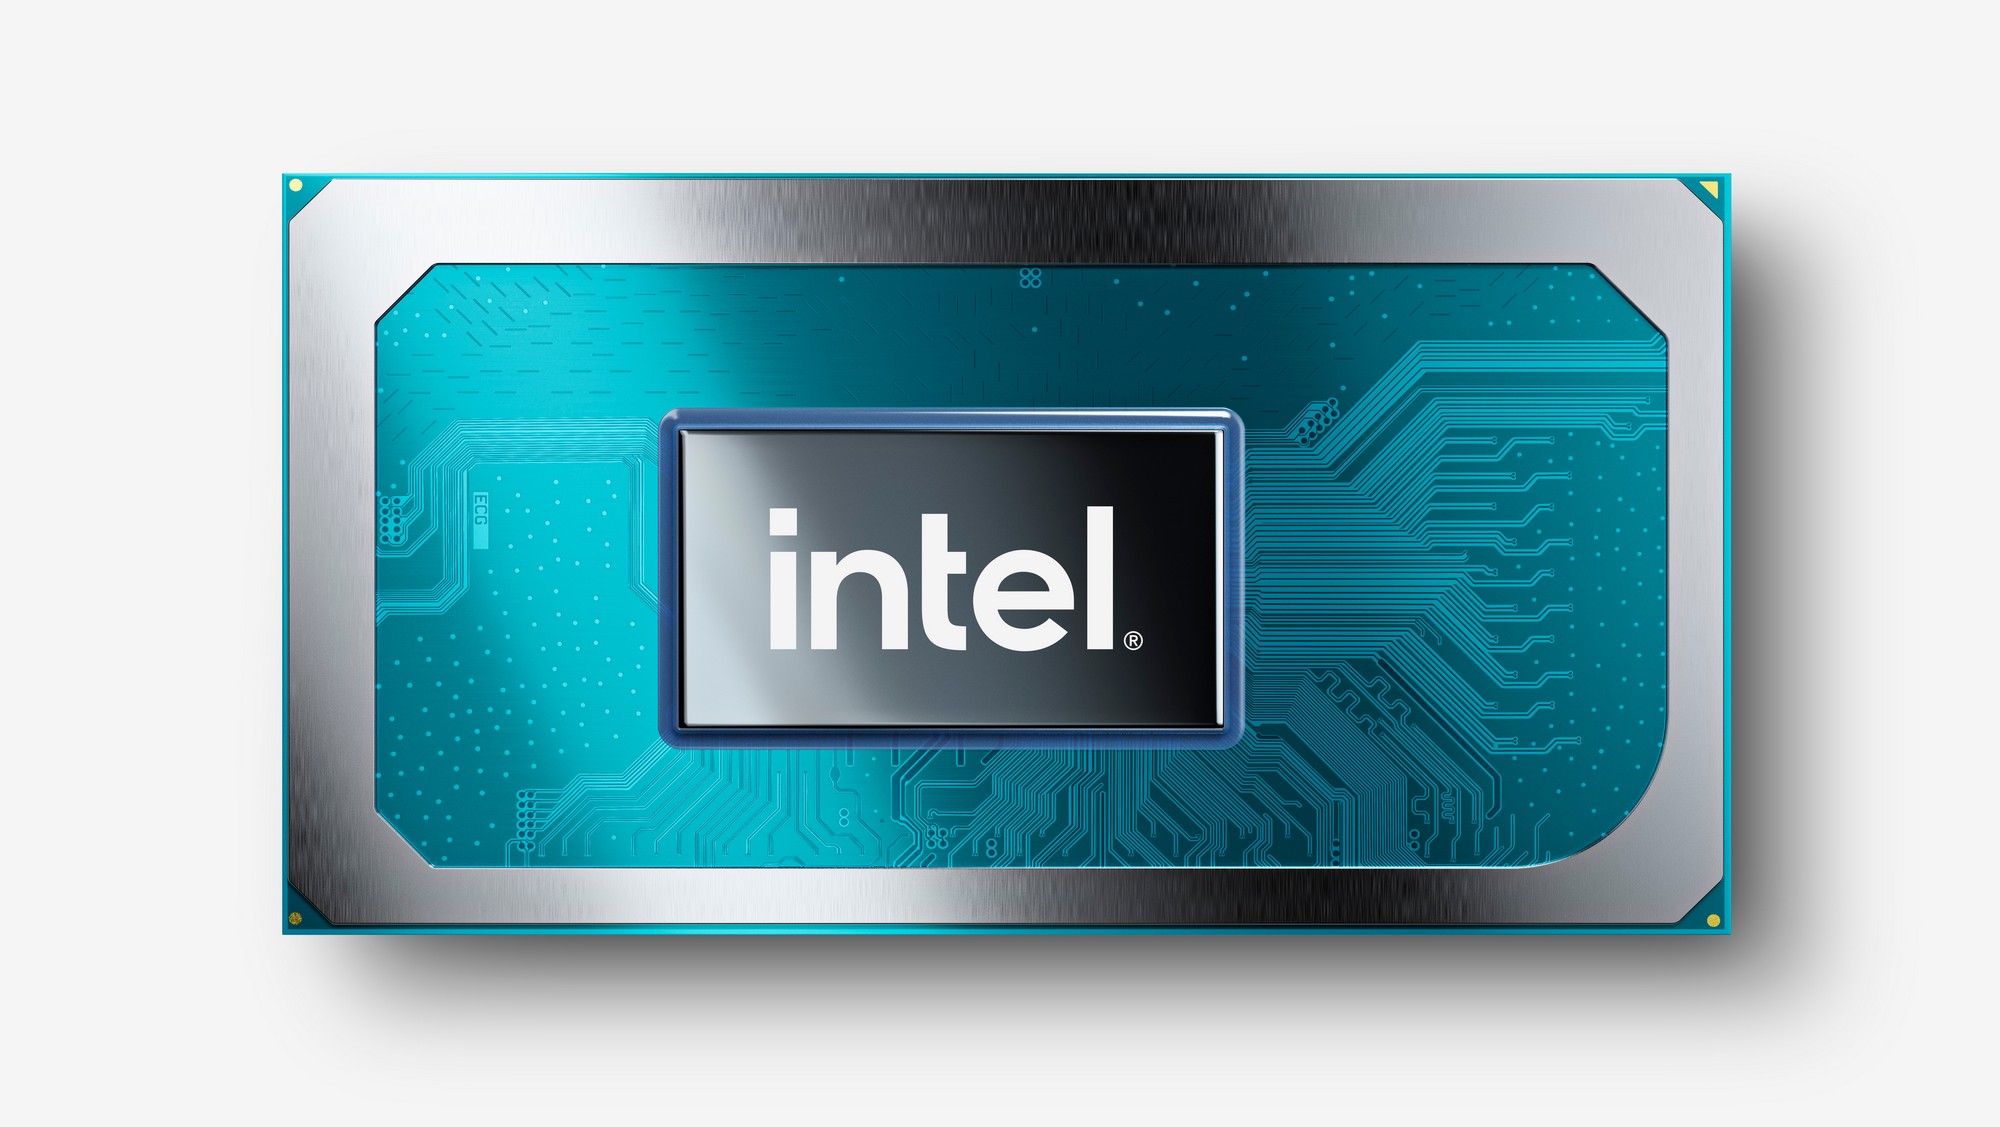 Intel's claim